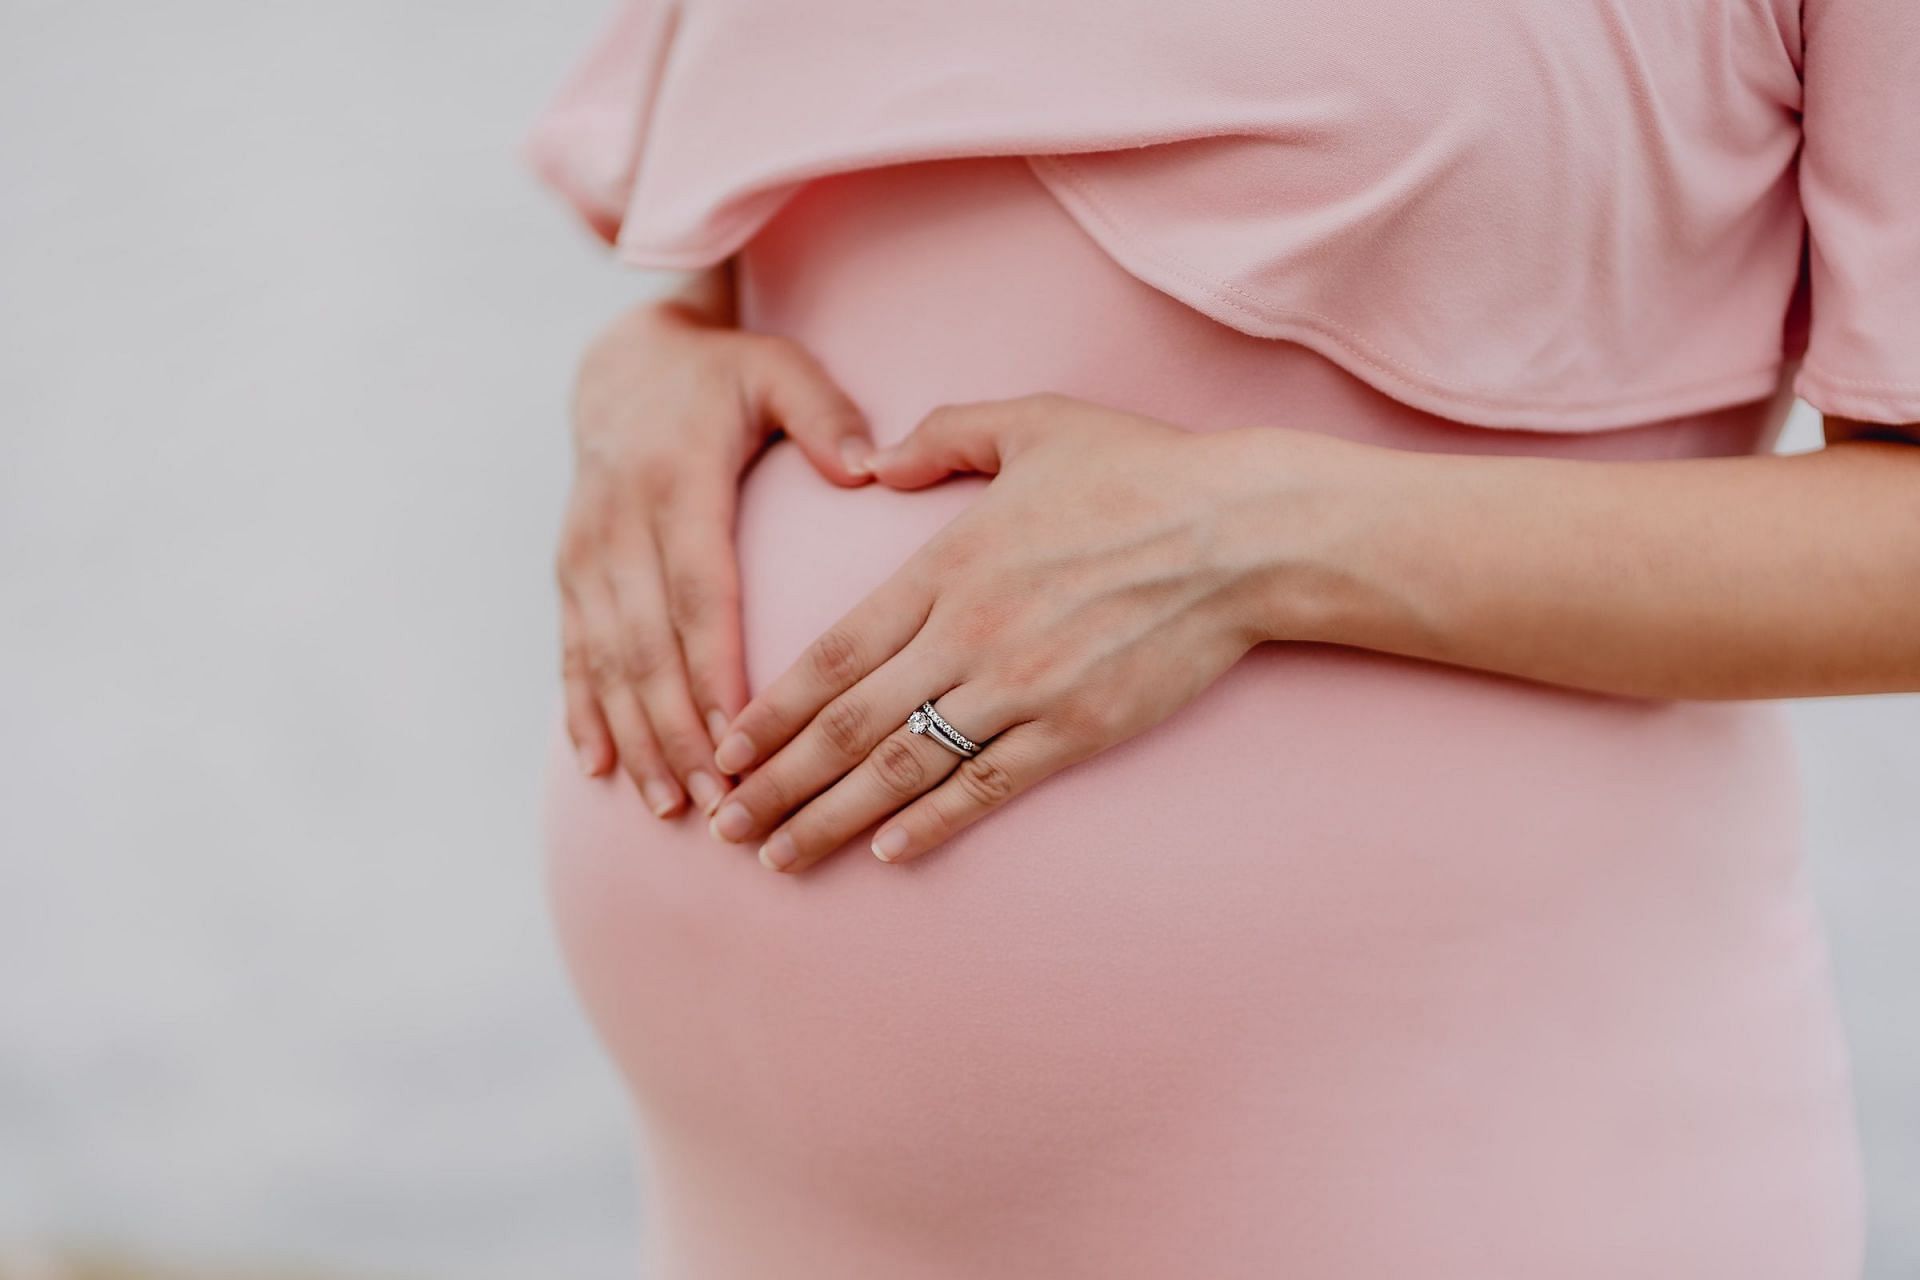 Lifting weights during pregnancy (Image via Unsplash/Juan Encalada)